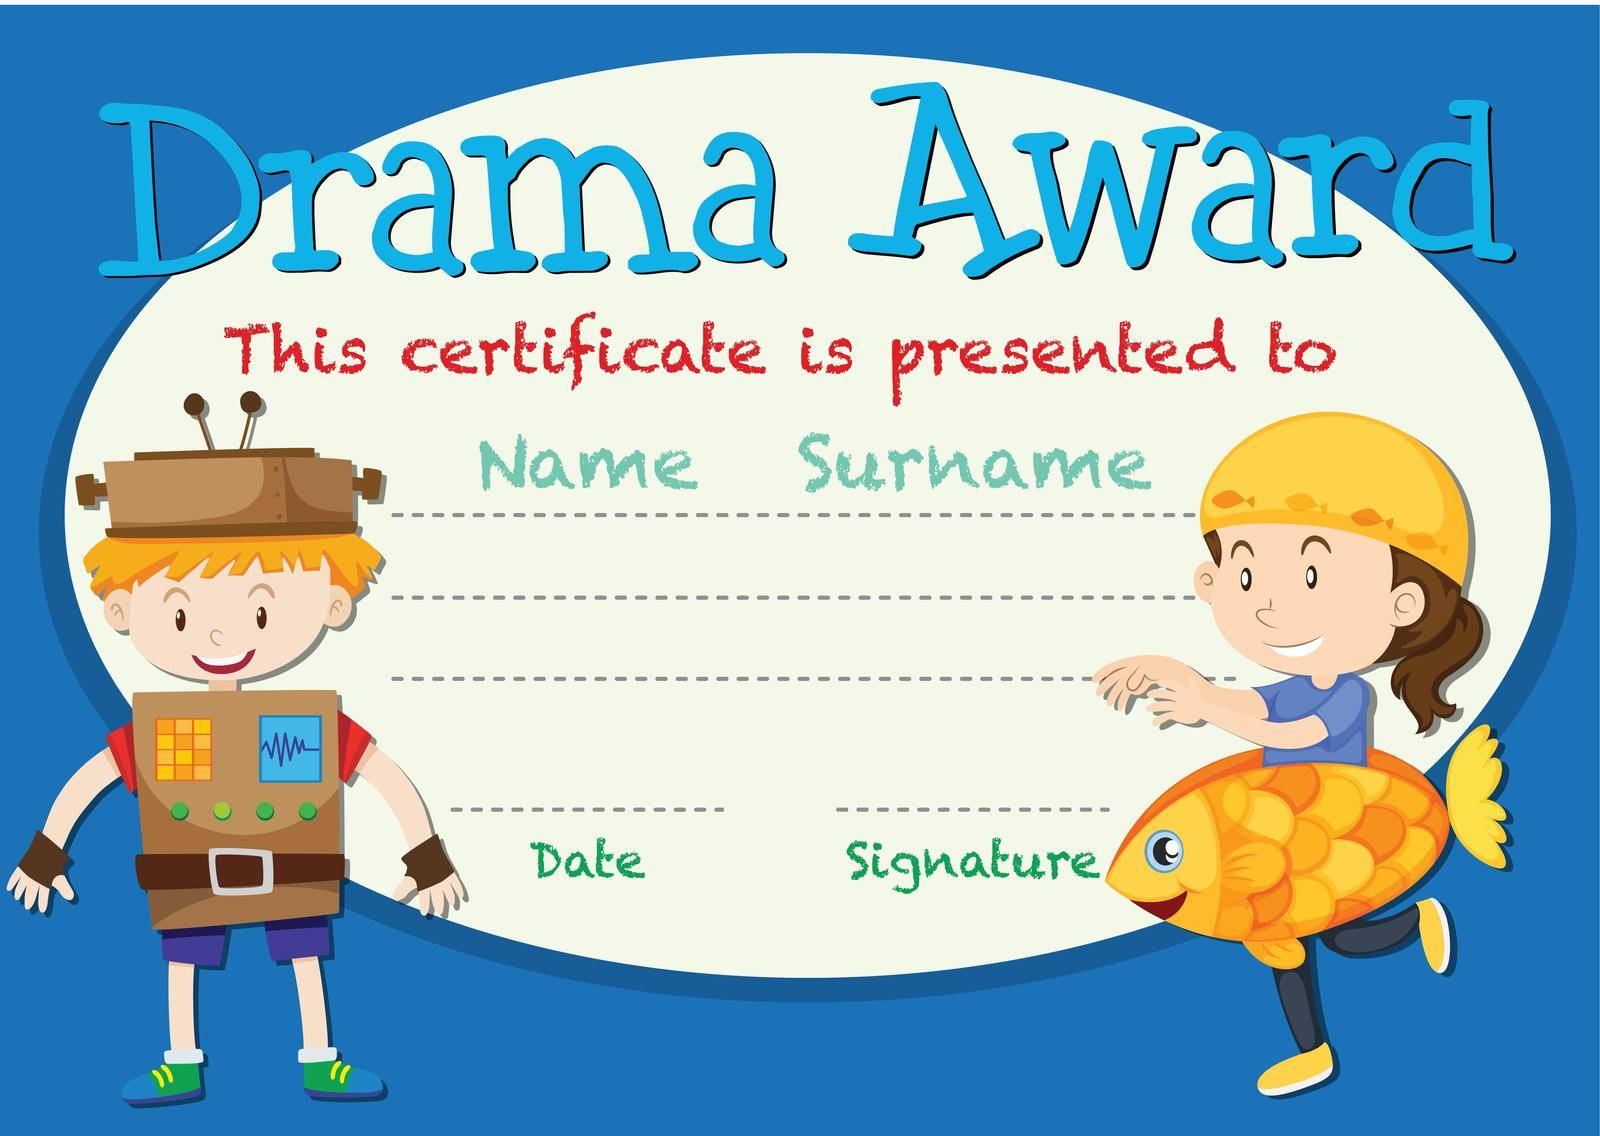 Drama award certificate concept illustration